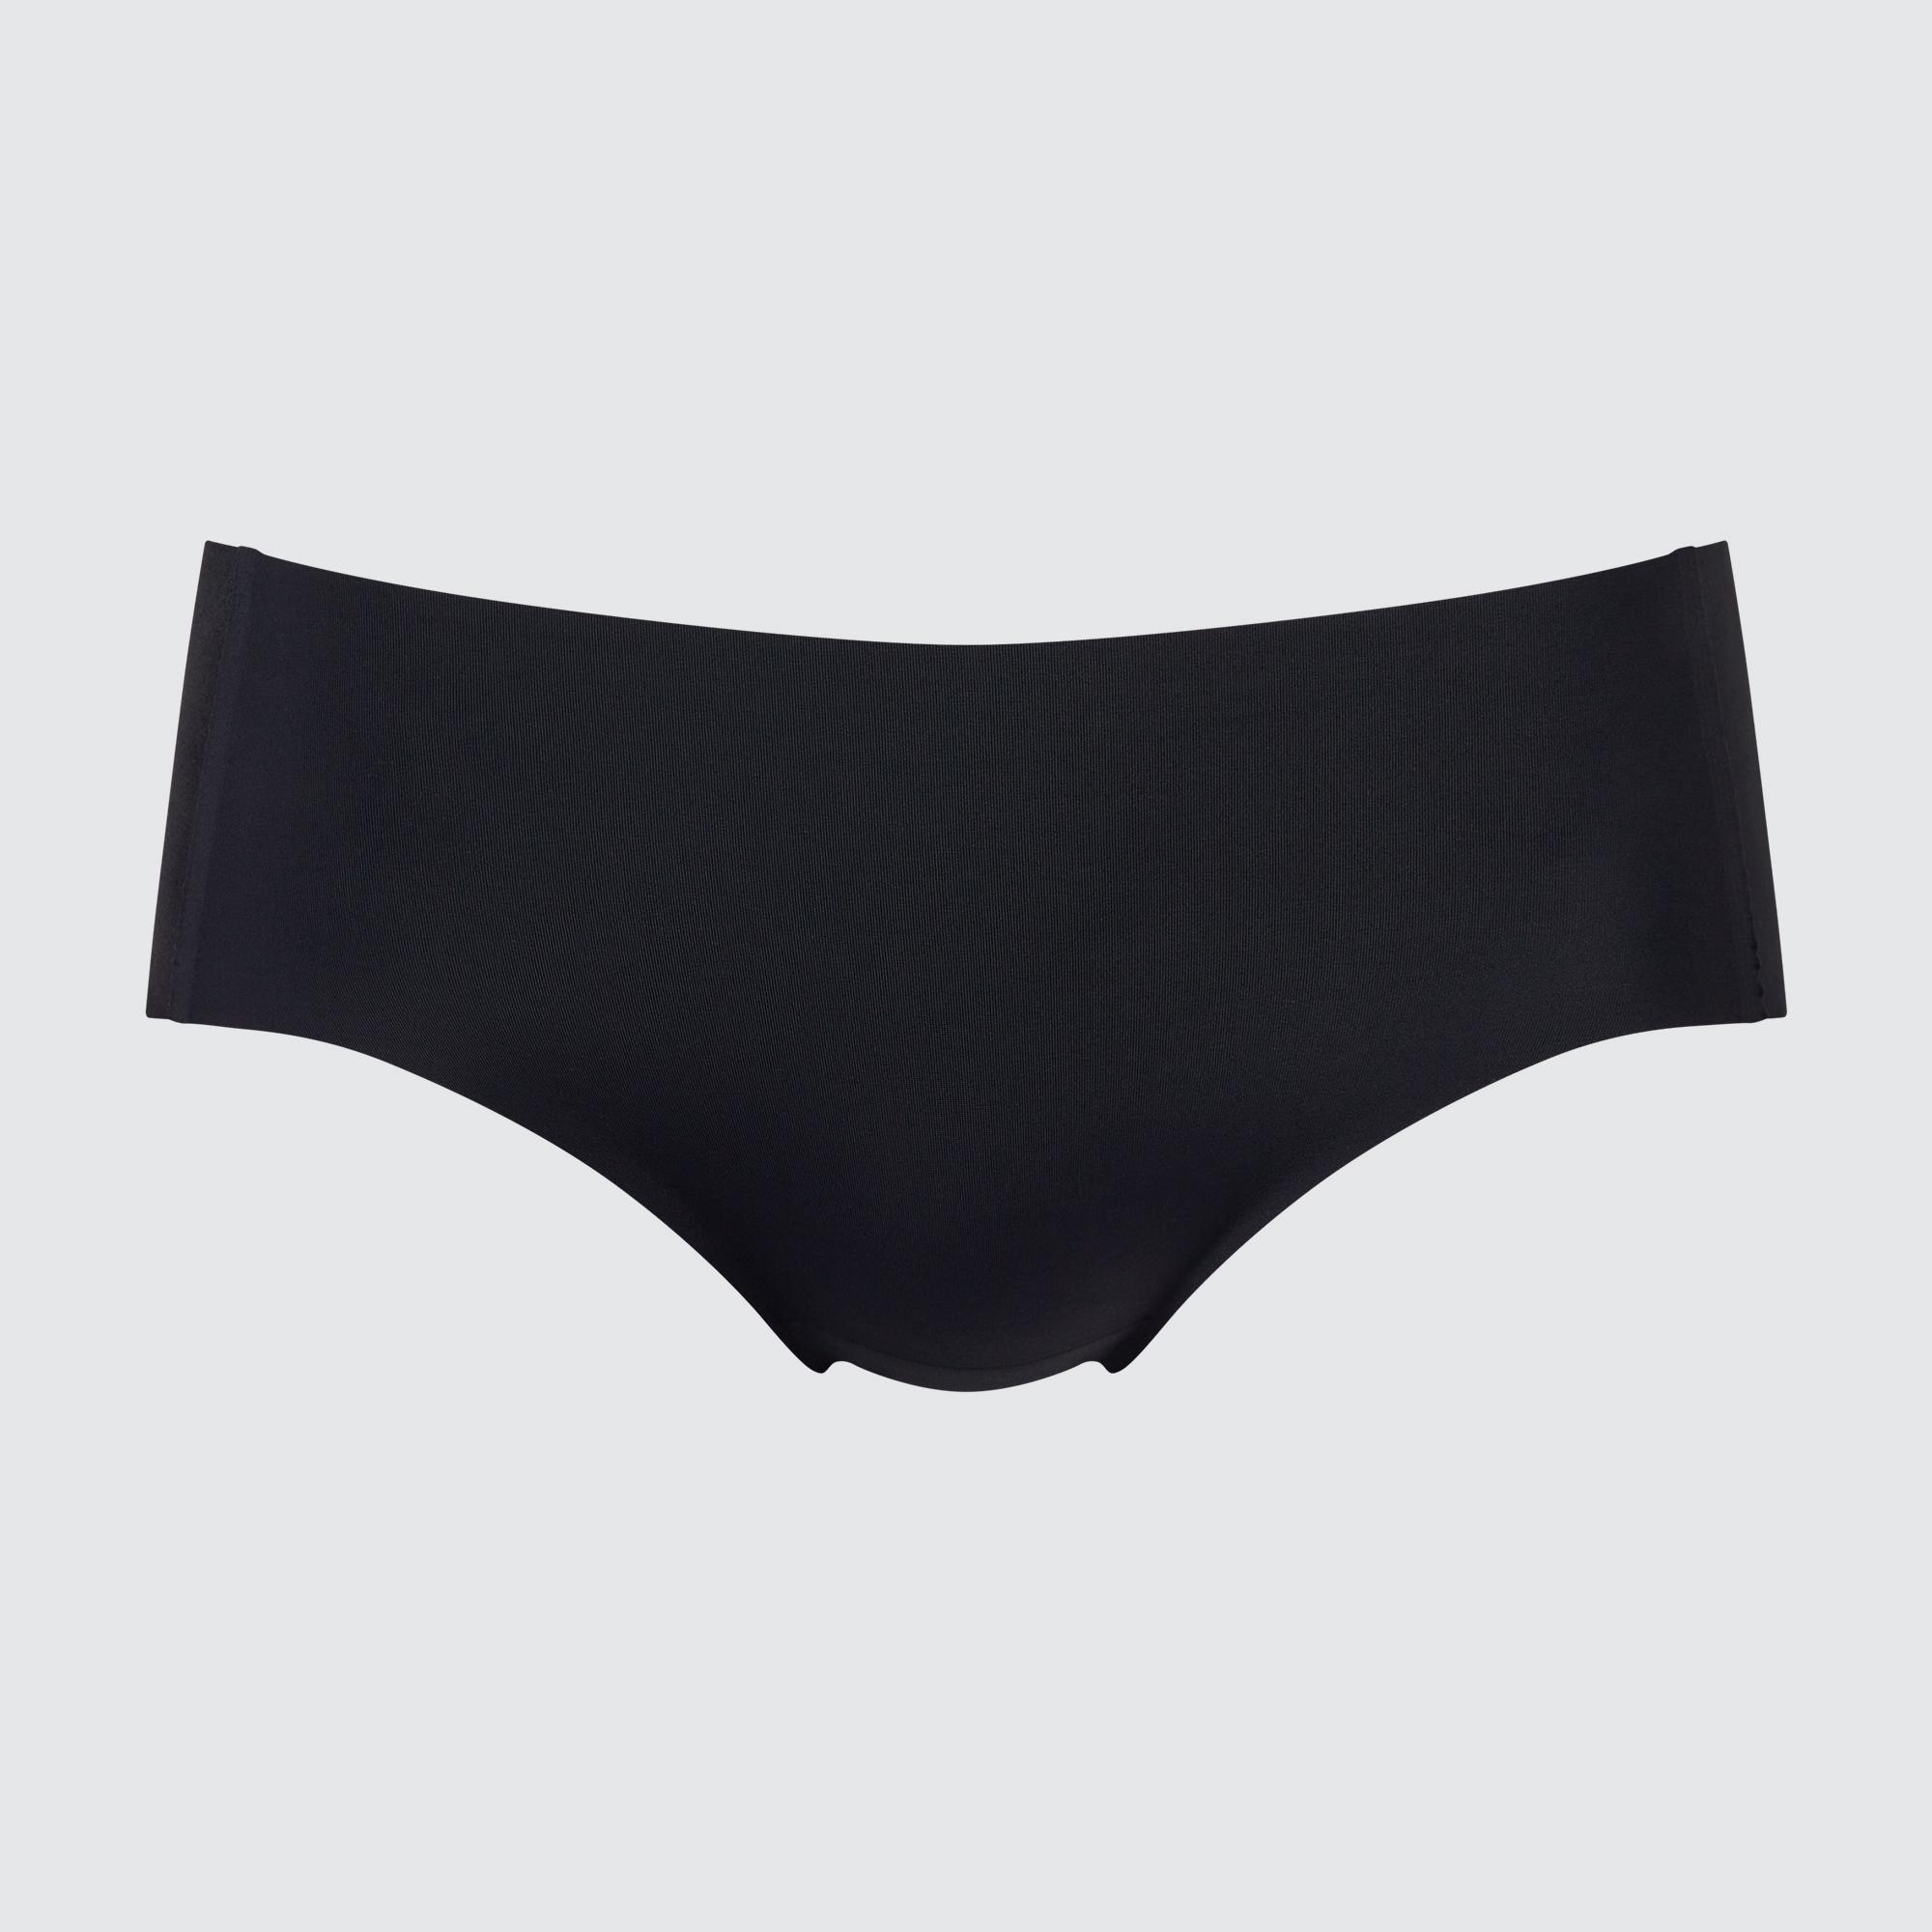 ☆ Invisible Panties Women Seamless Briefs Underpants Underwear